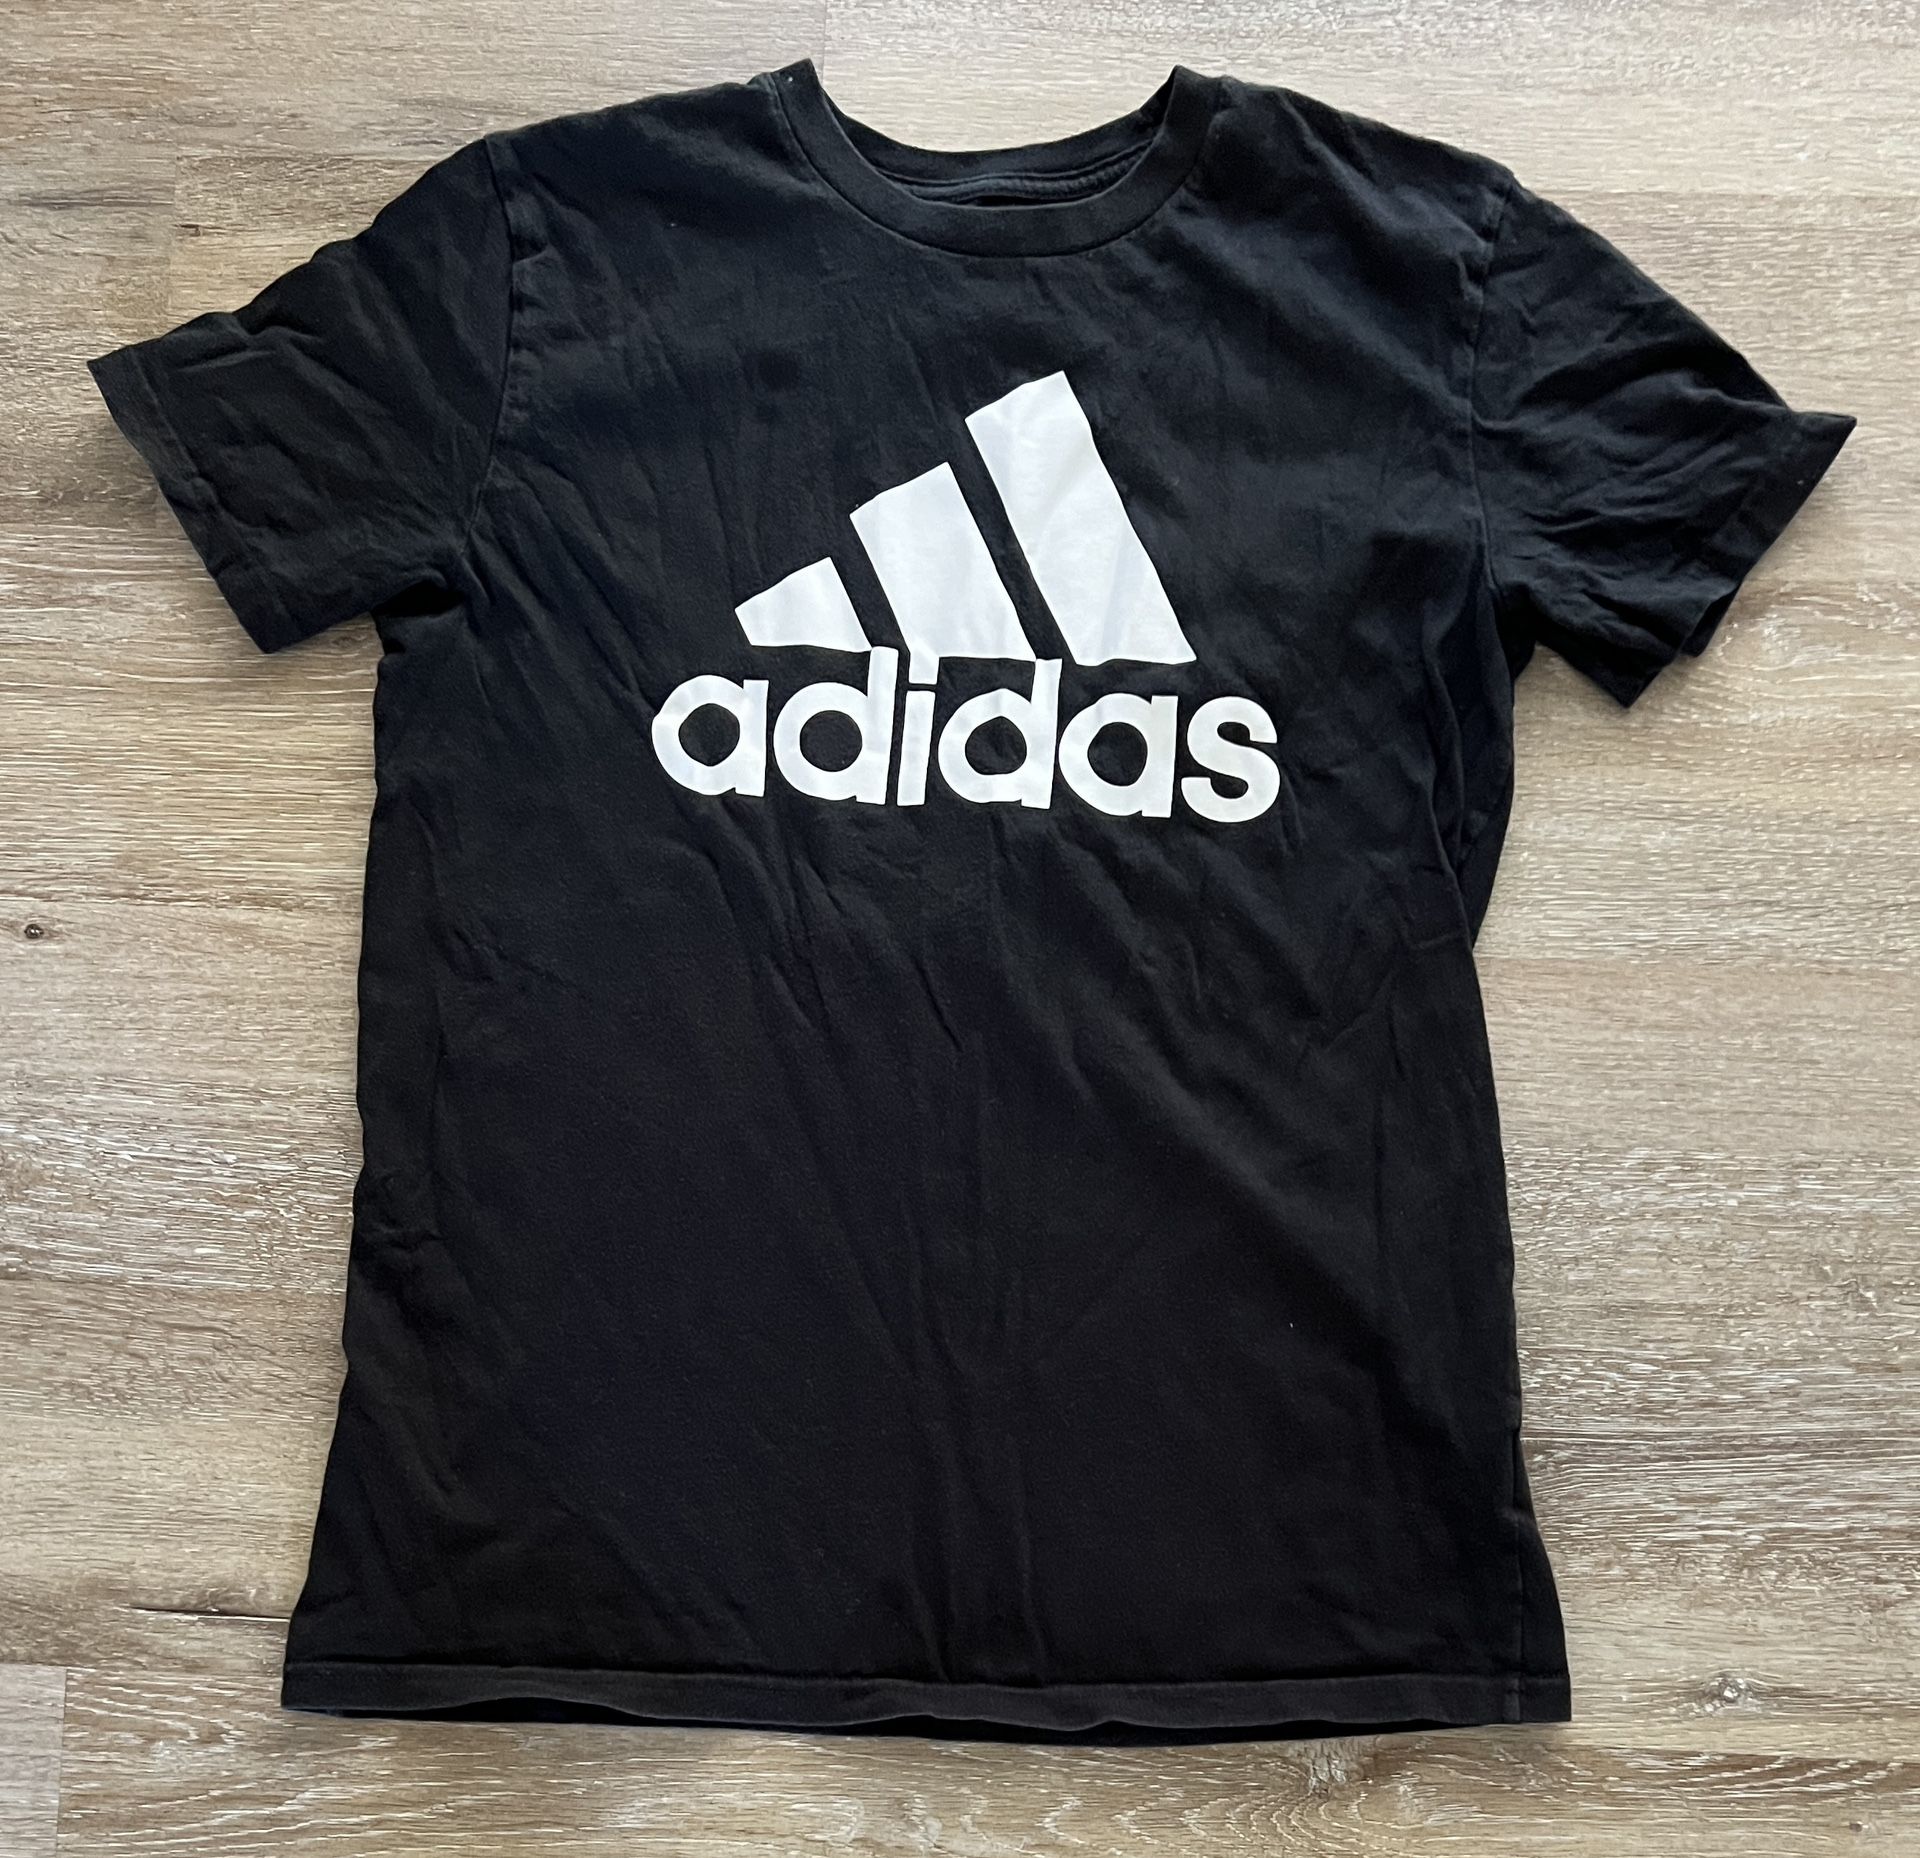 Adidas T-Shirt Boys Size L(14-16) Athletic Kids Youth Black 